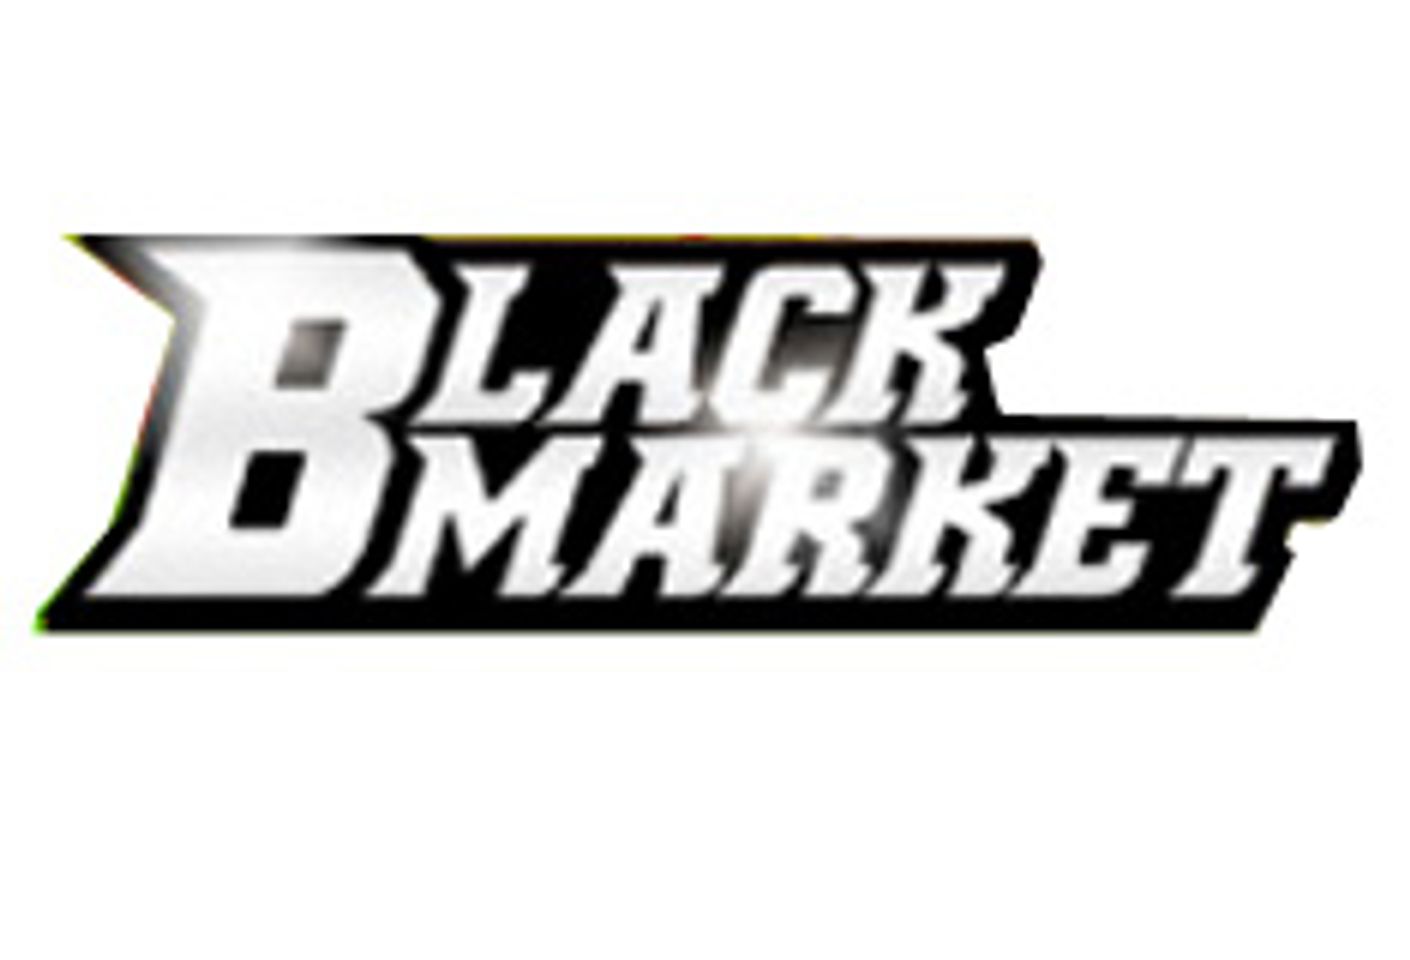 Black Market Whips Up a 'Chocolate MILF Shake'